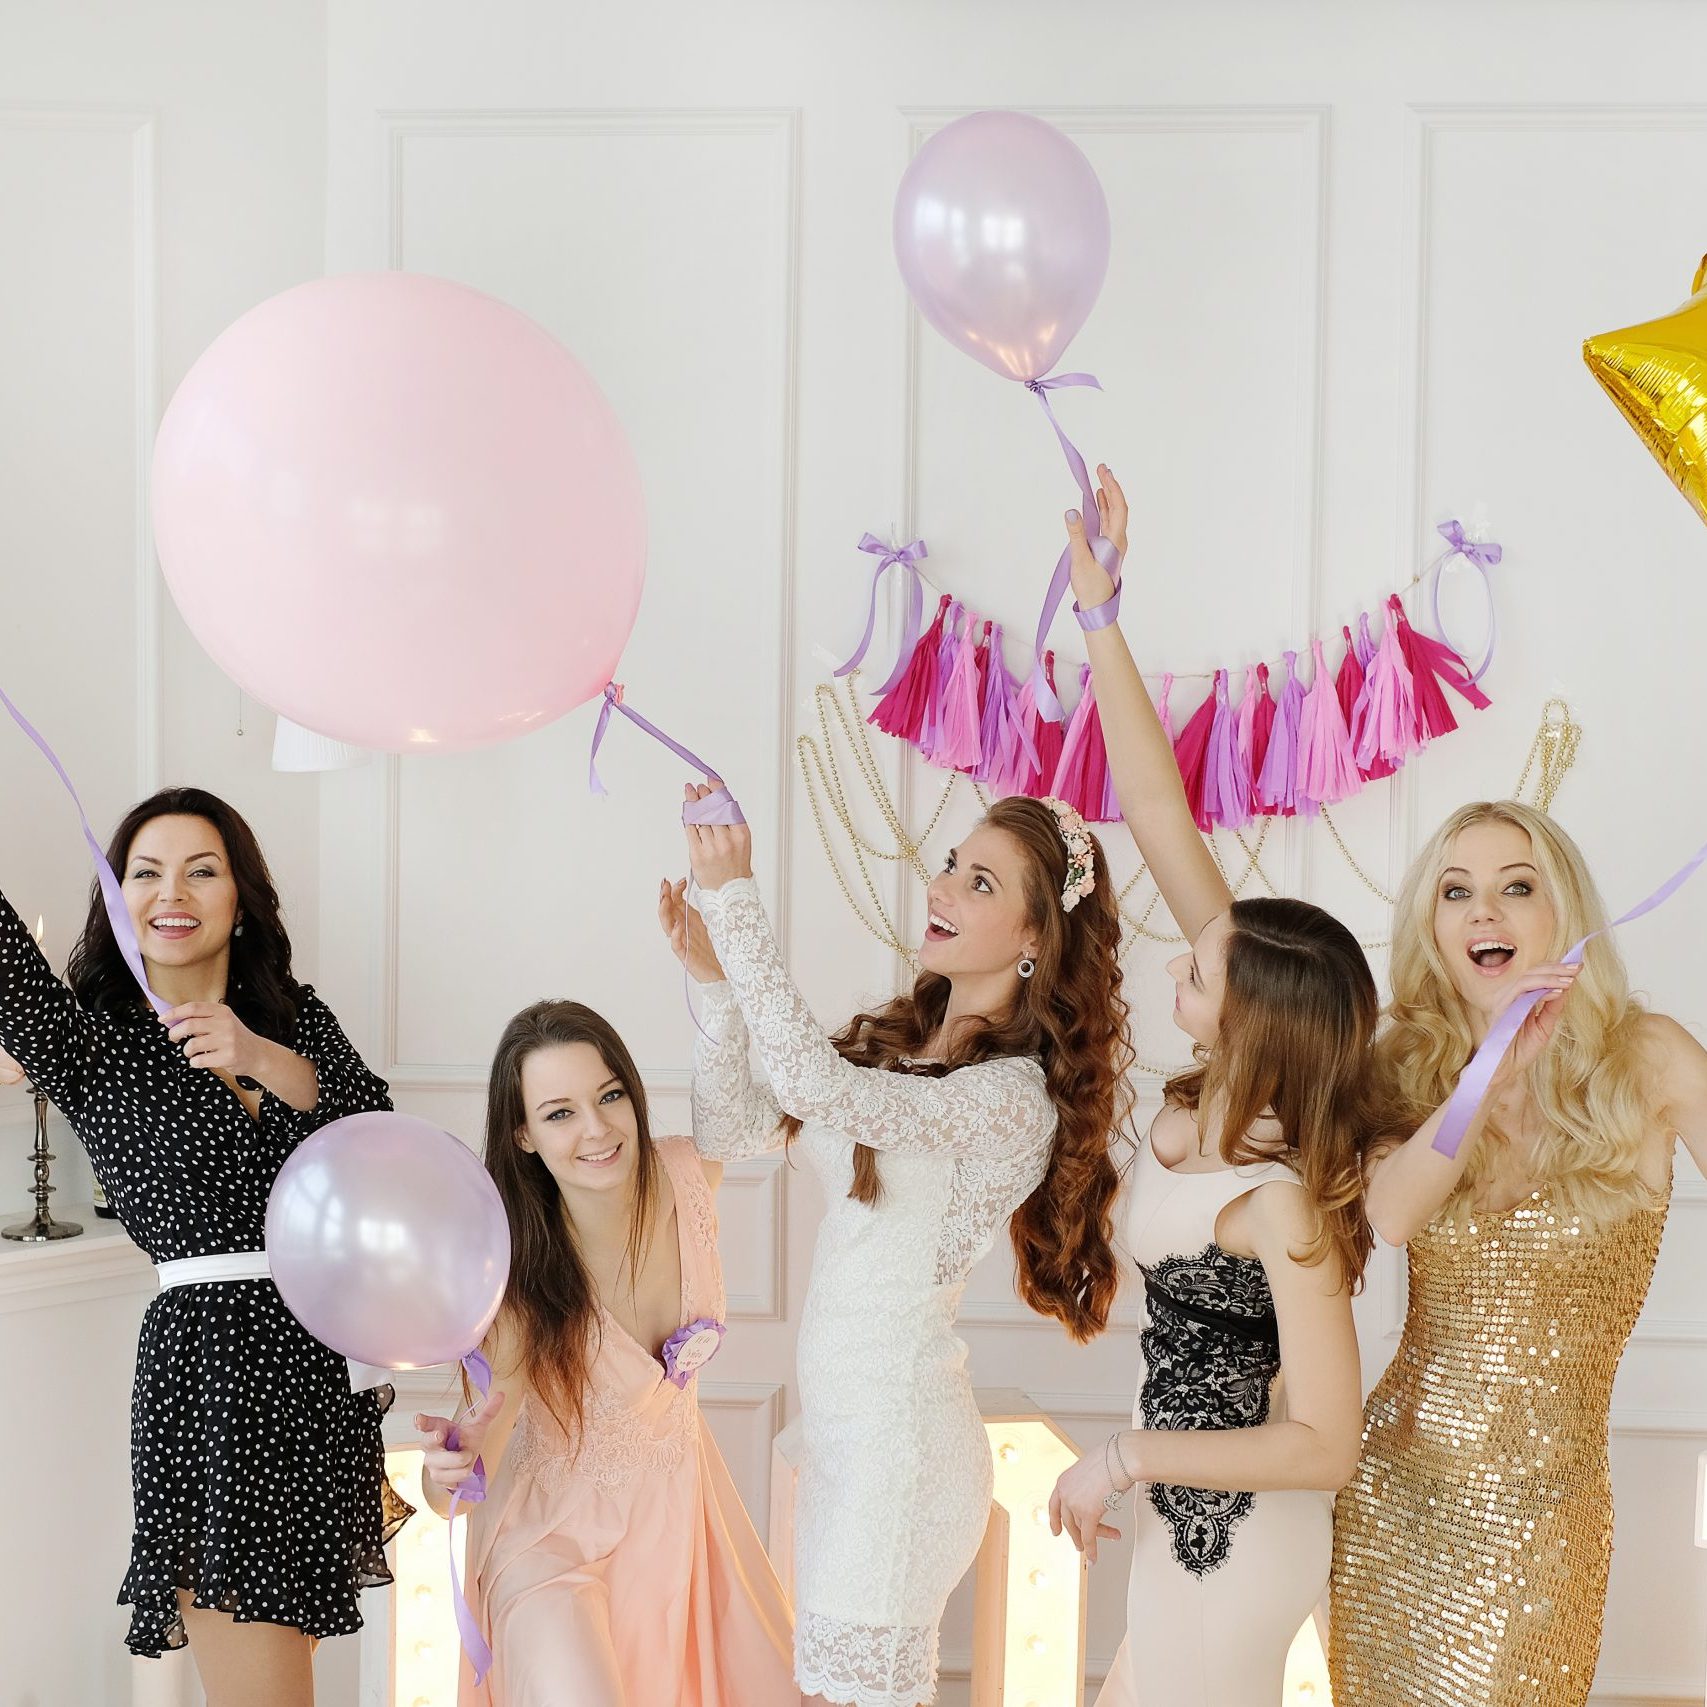 Team bride. Women celebrating bachelorette party